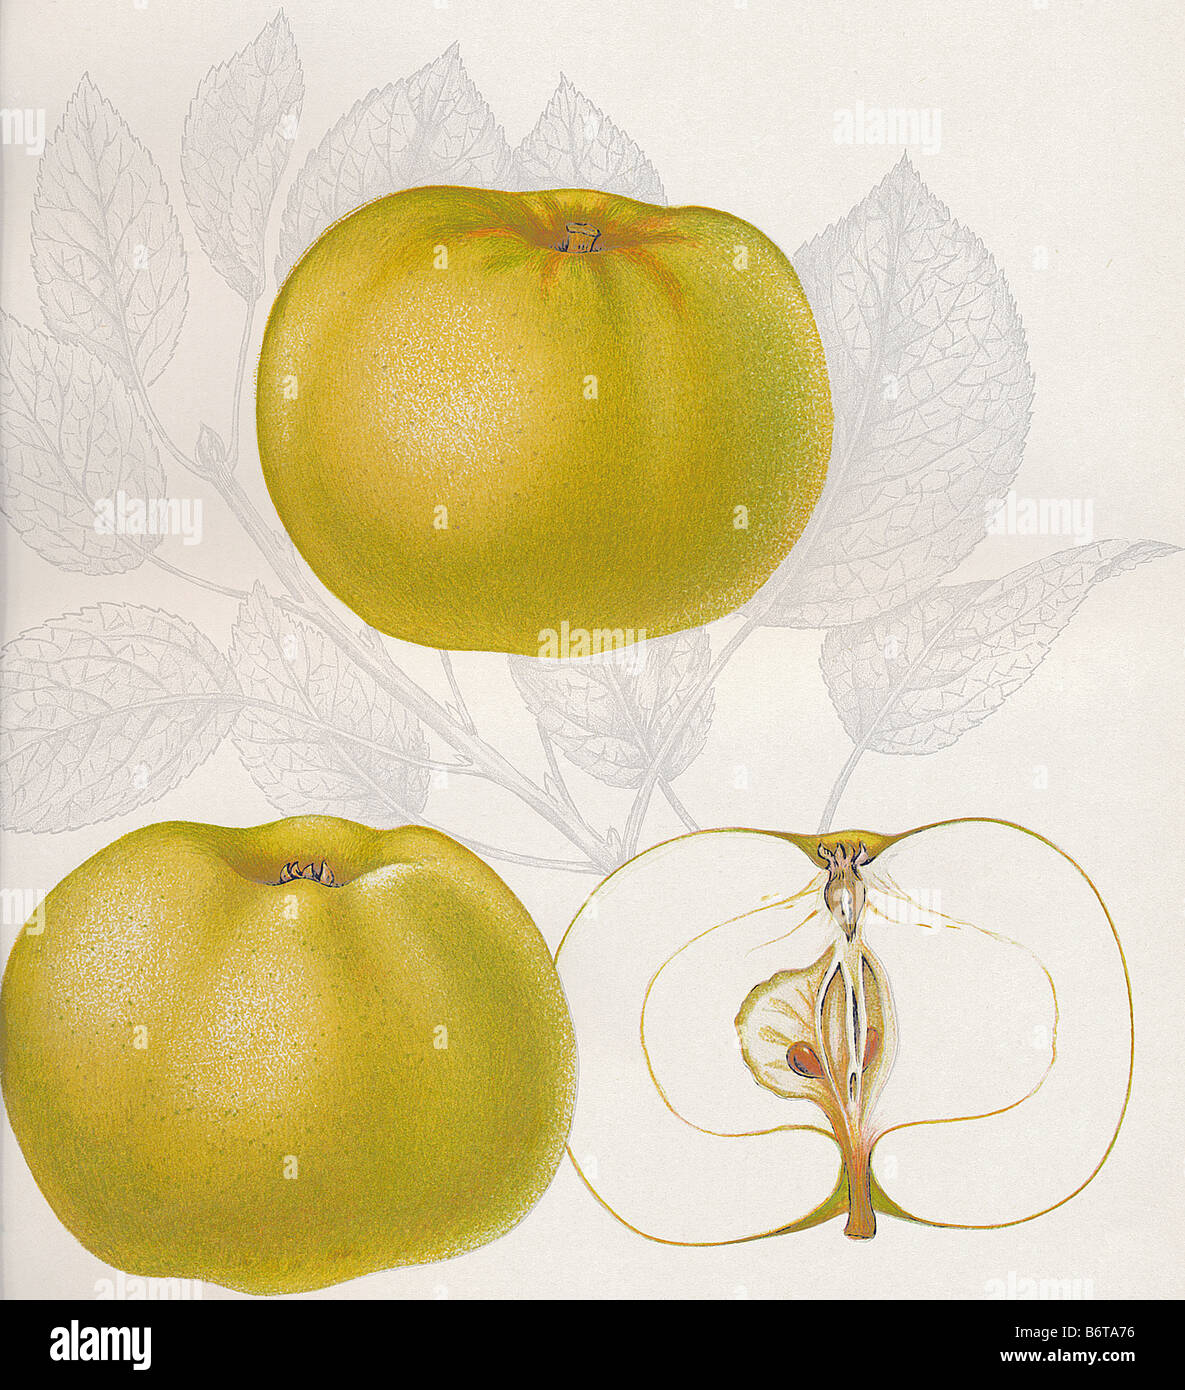 Abbildung des Apfels "Hanaskogsäpple" Stockfoto